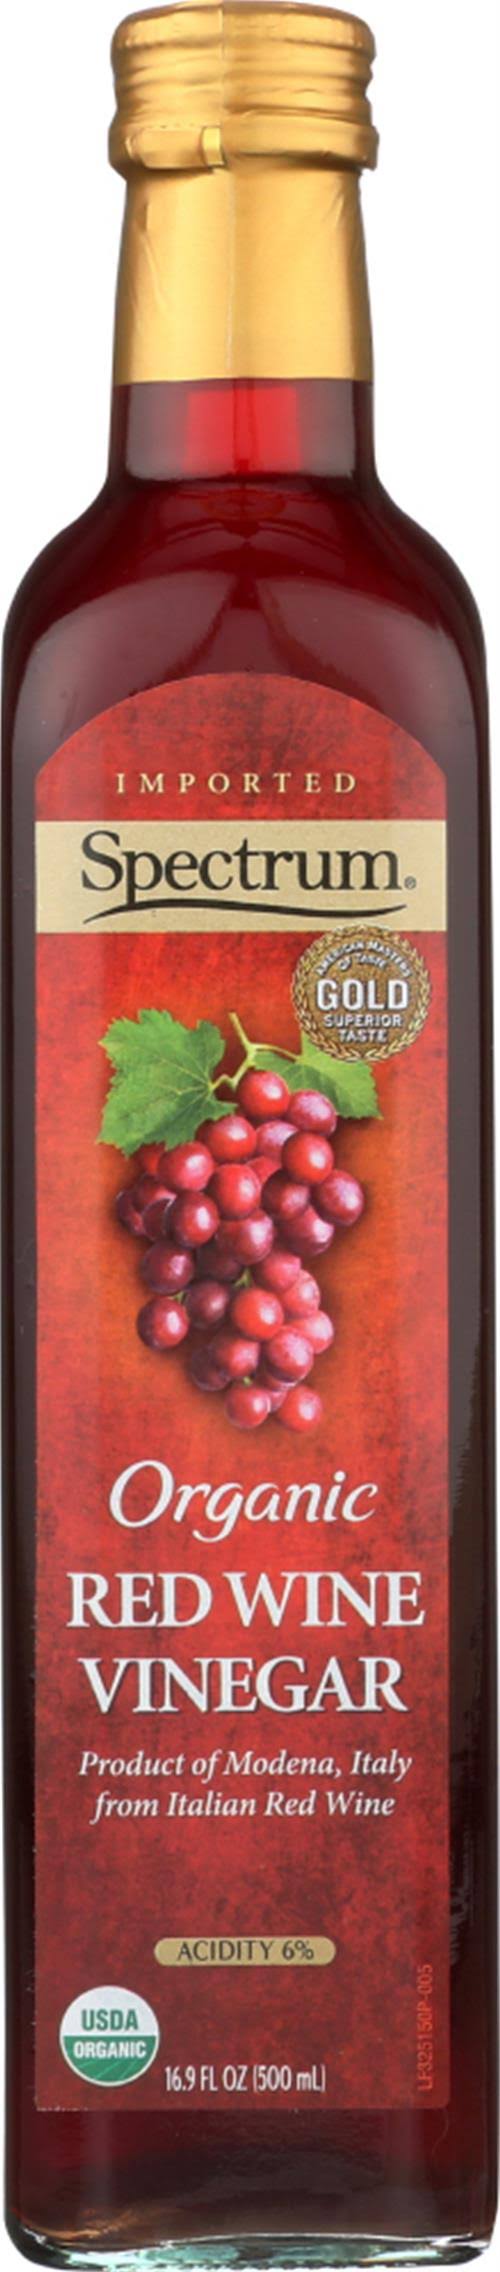 Spectrum Vinegar, Organic, Red Wine - 16.9 fl oz